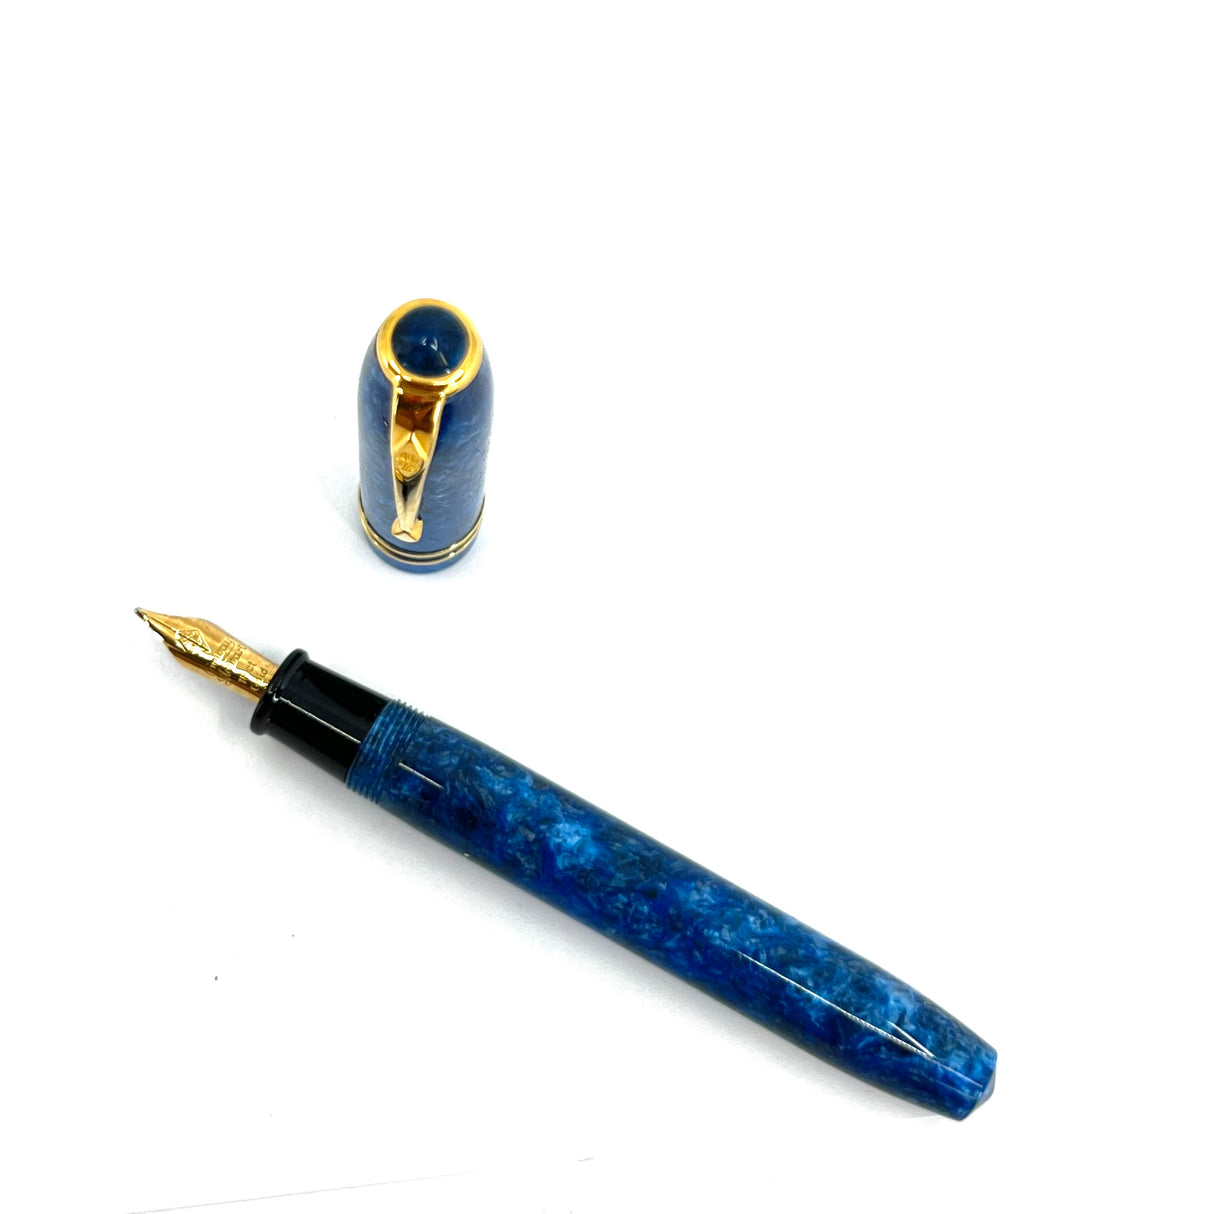 Conway Stewart Dinkie Marbled  Blue Fountain Pen